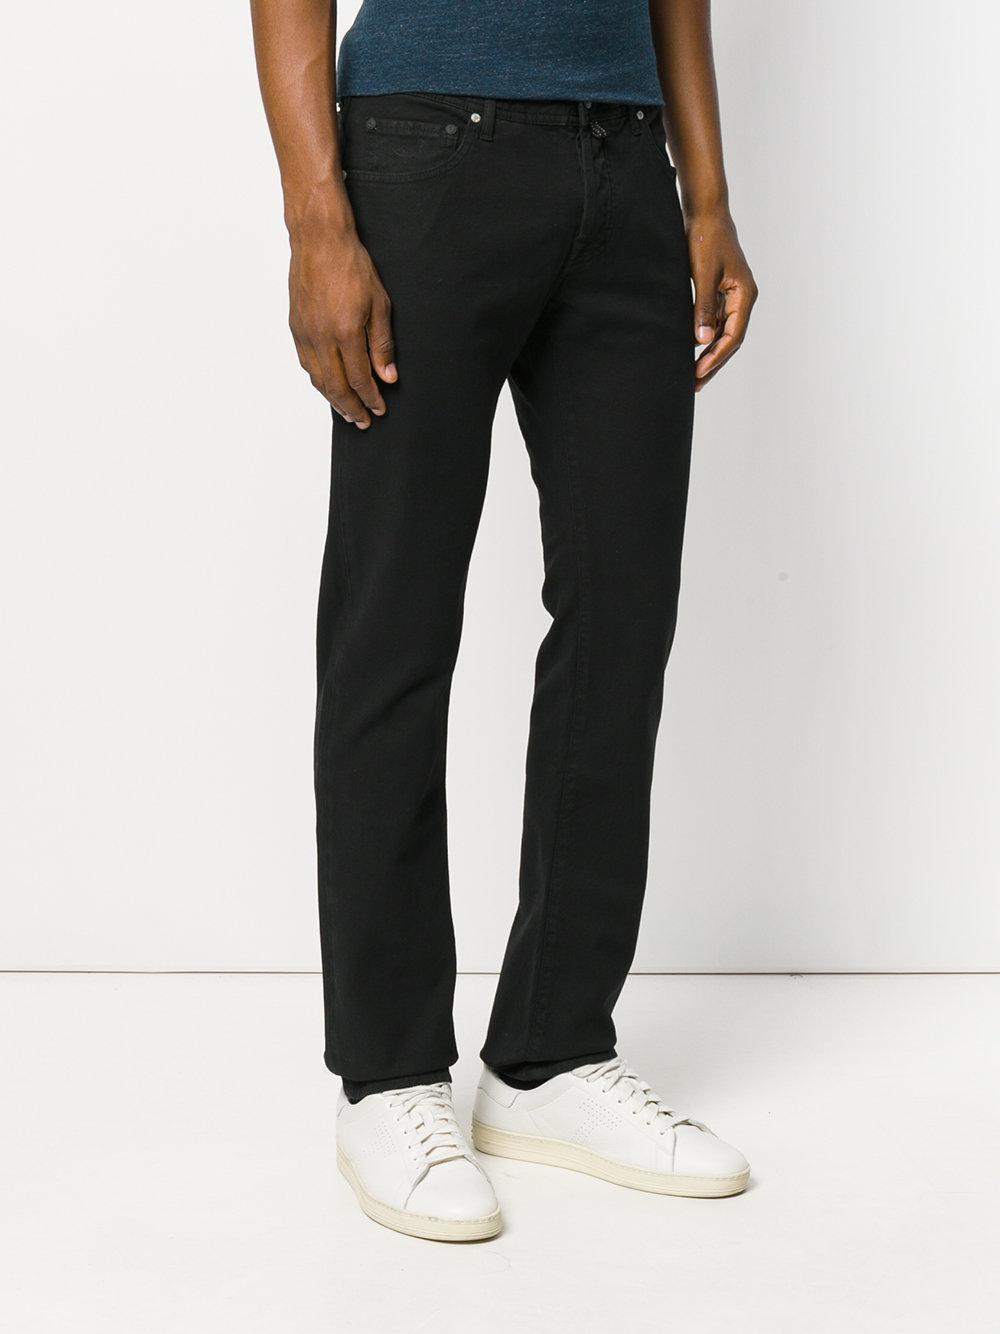 Jacob Cohen Denim Textured Jeans in Black for Men - Lyst